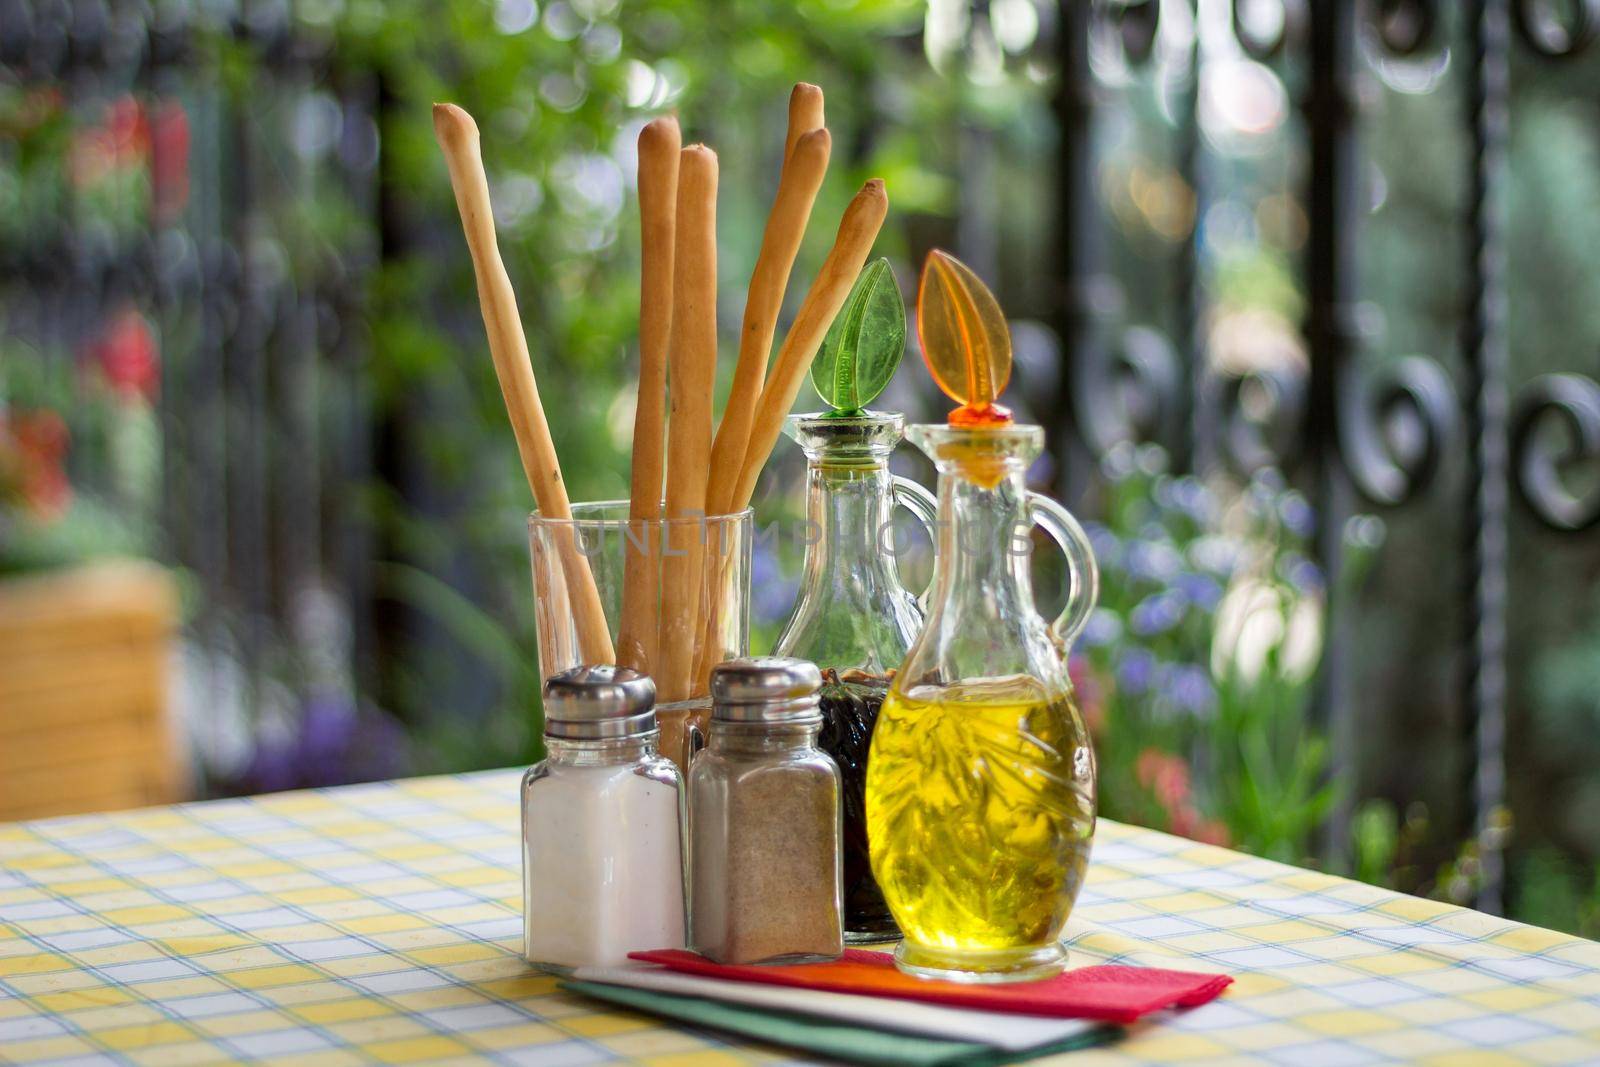 Italian serving. Table set of olive oil, bread sticks, salt and pepper